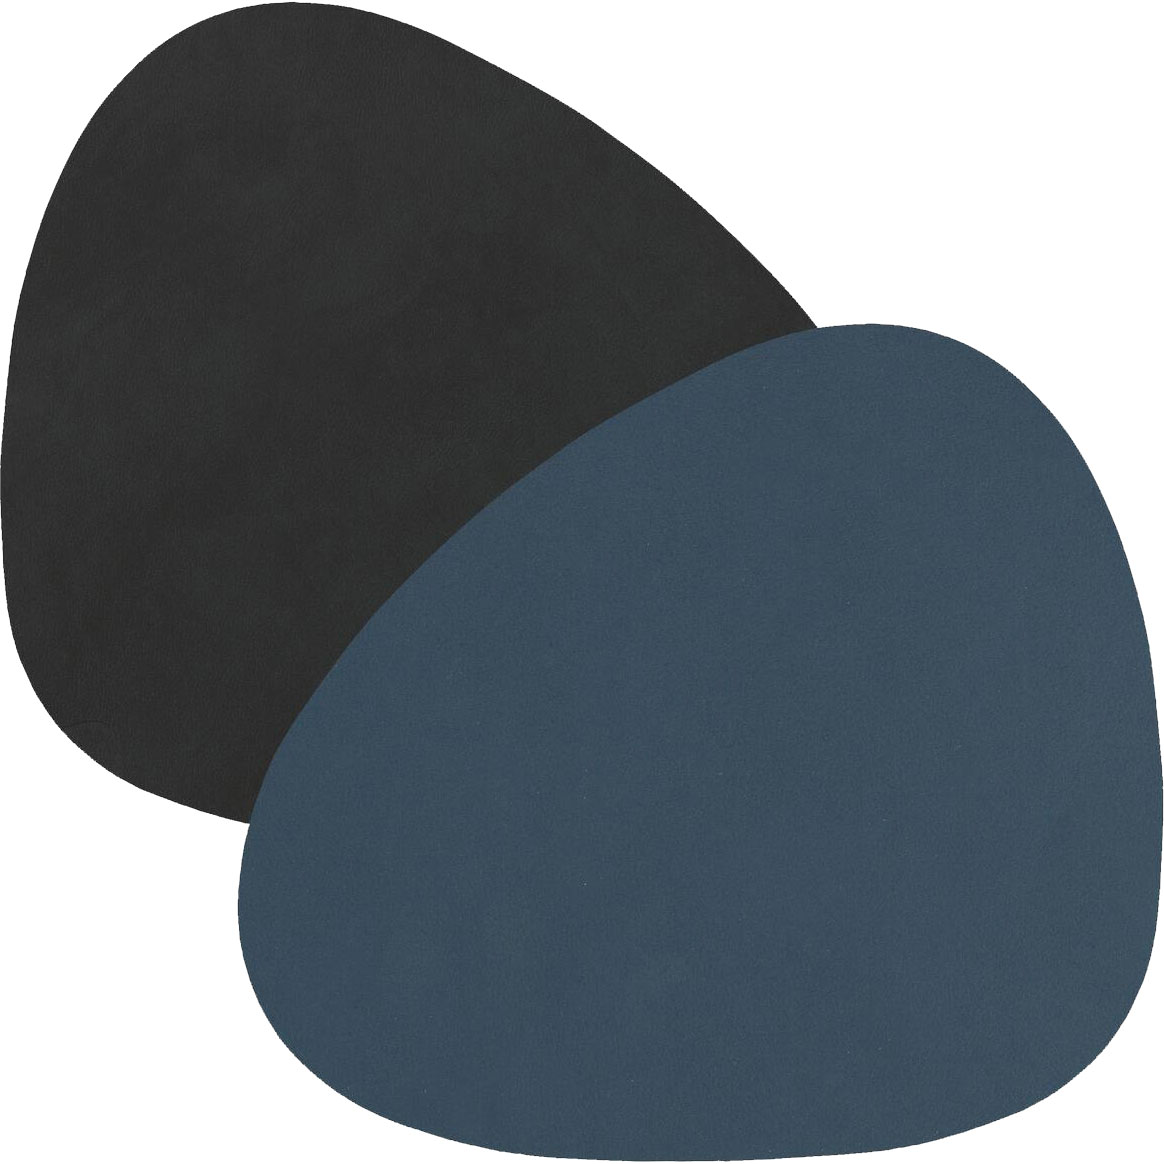 Curve Lasinalunen 11x13cm, Dark Blue/ Black